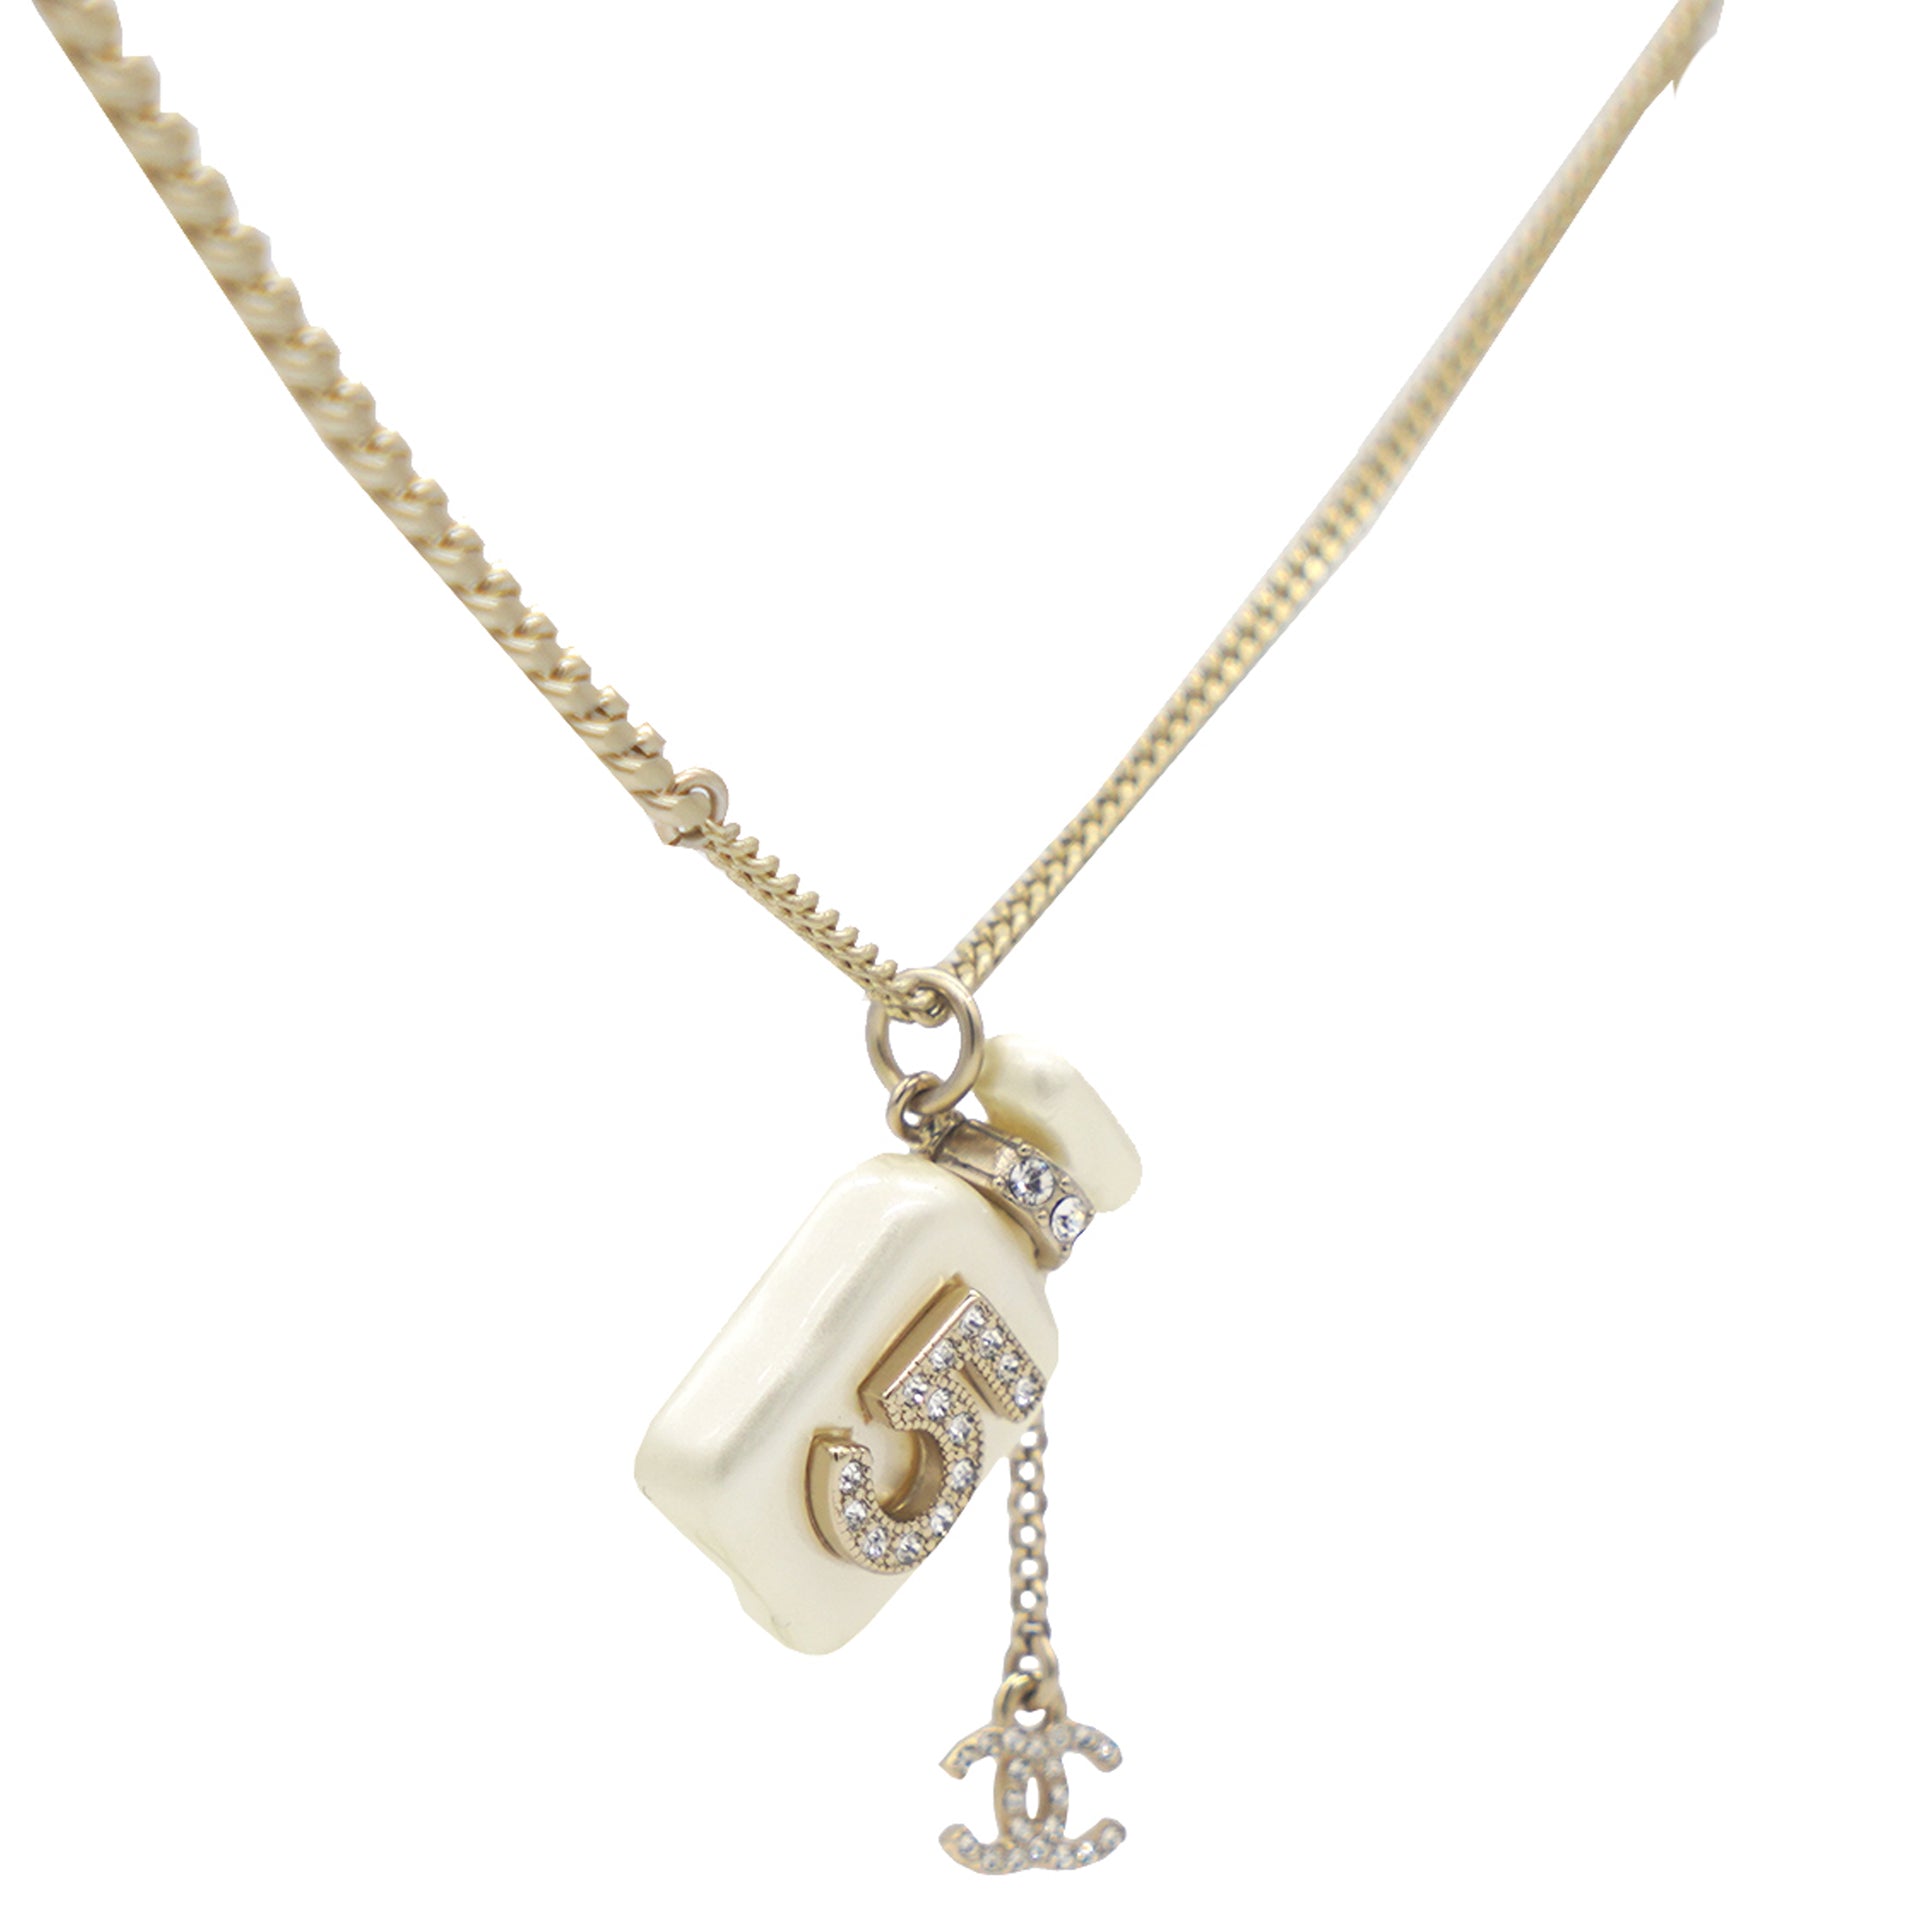 Chanel NO.5 Perfume Mini Bottle Necklace Leather Gold Black Accessories  Rare